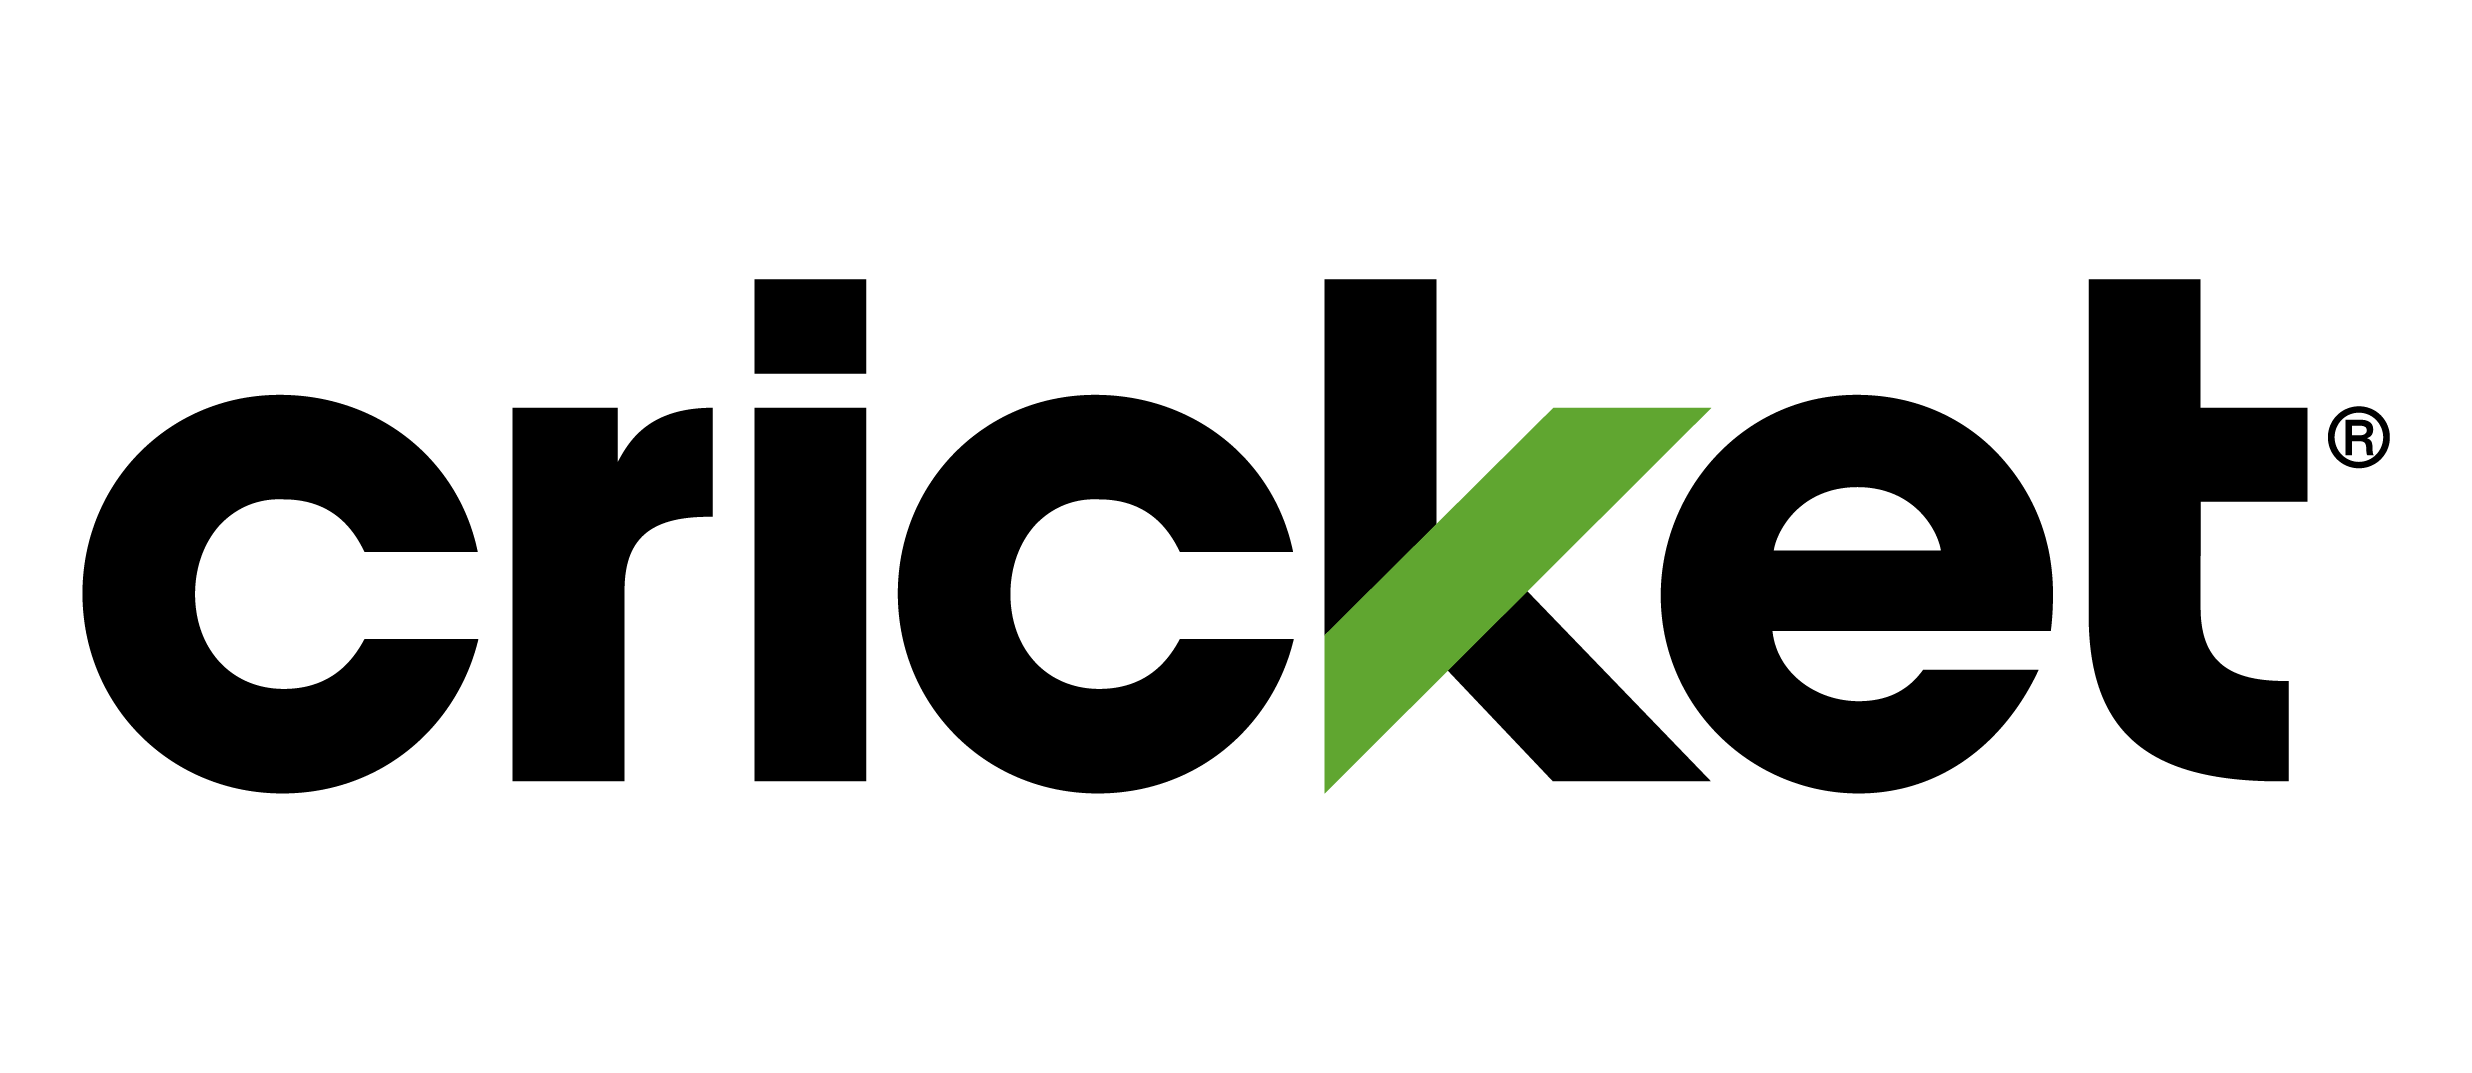 Cricket Logo Black